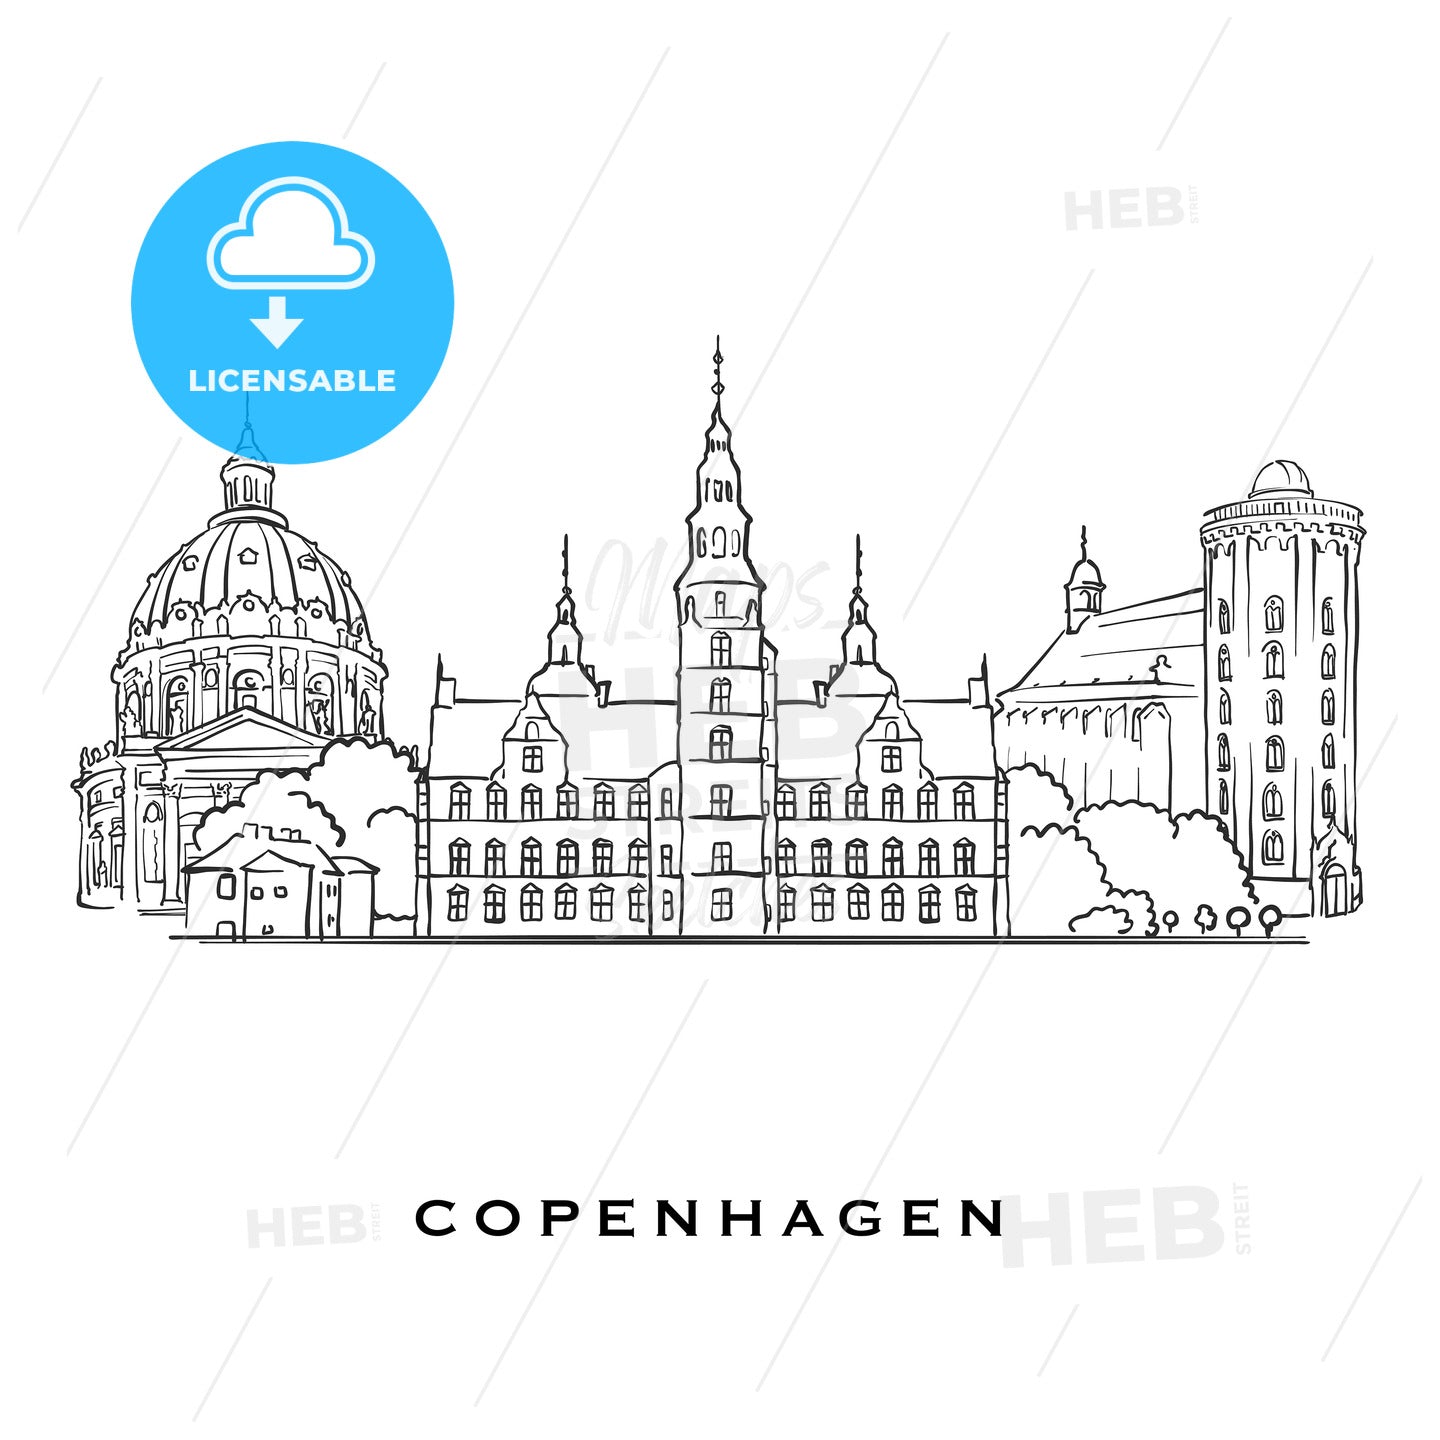 Copenhagen Denmark famous architecture – instant download